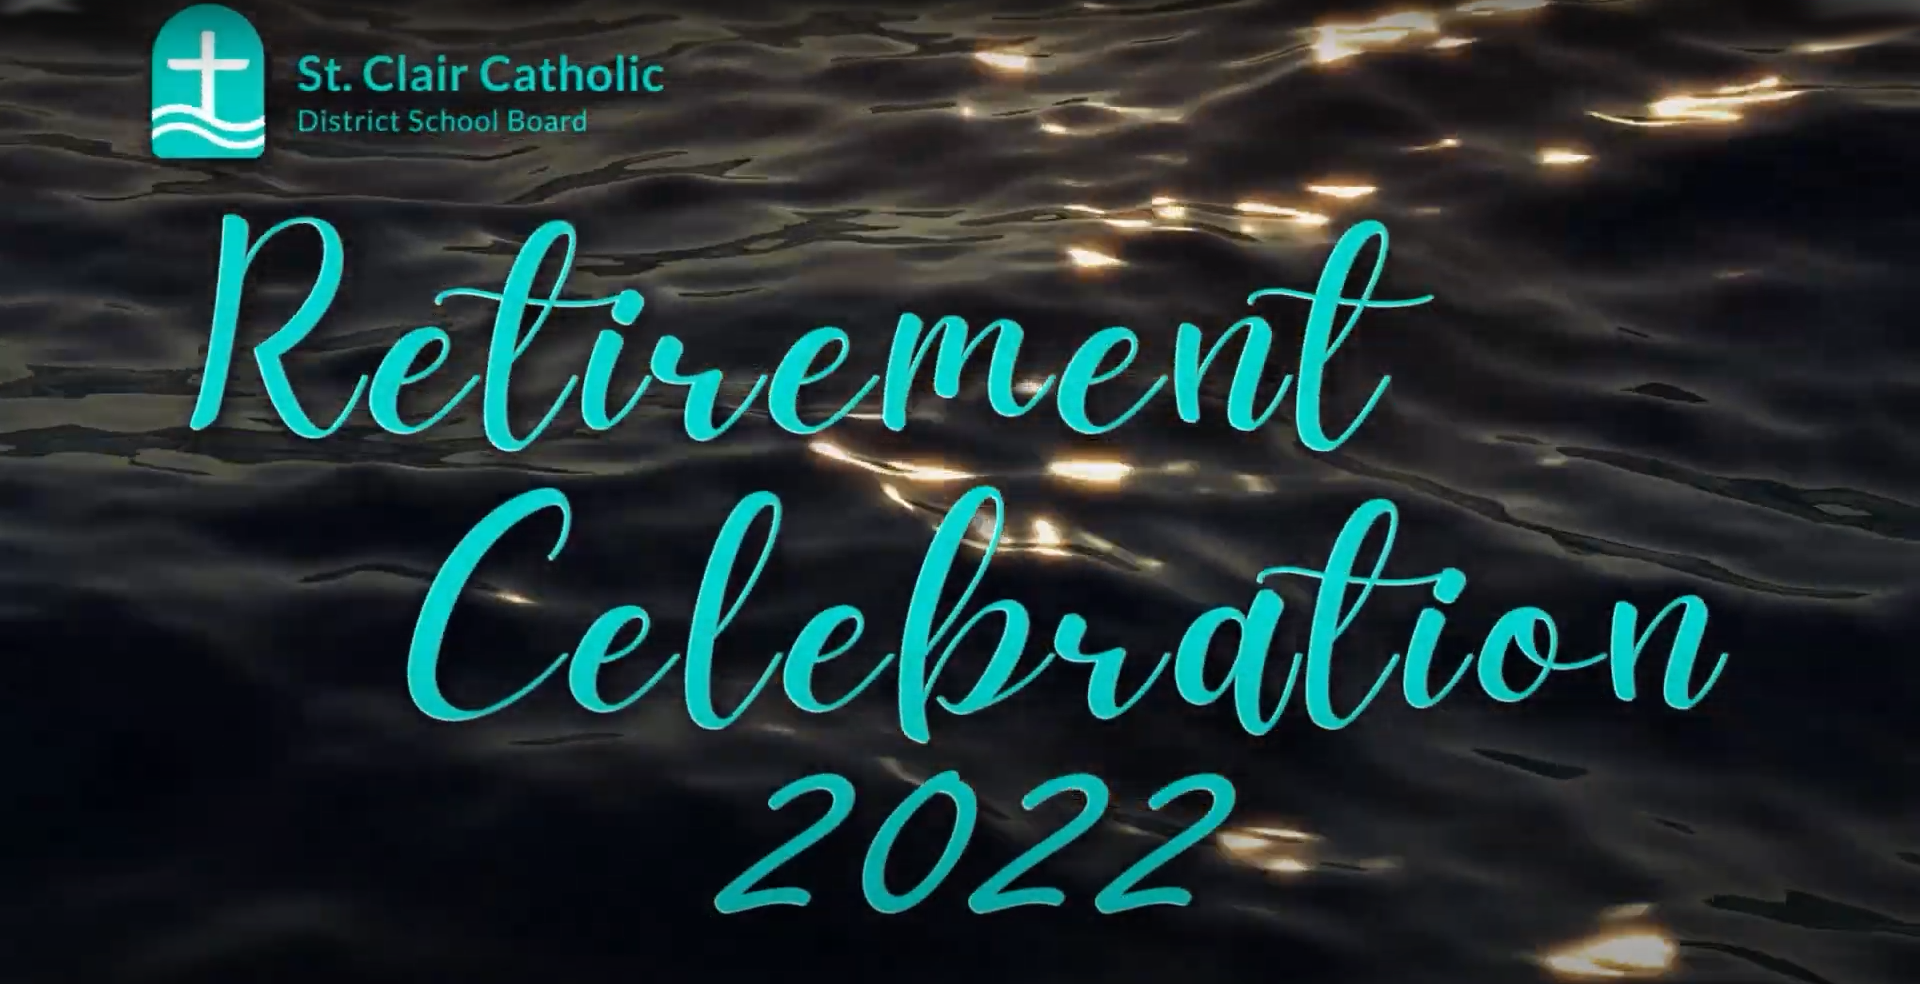 In Case You Missed It: SCCDSB’s Retirement Celebration 2022